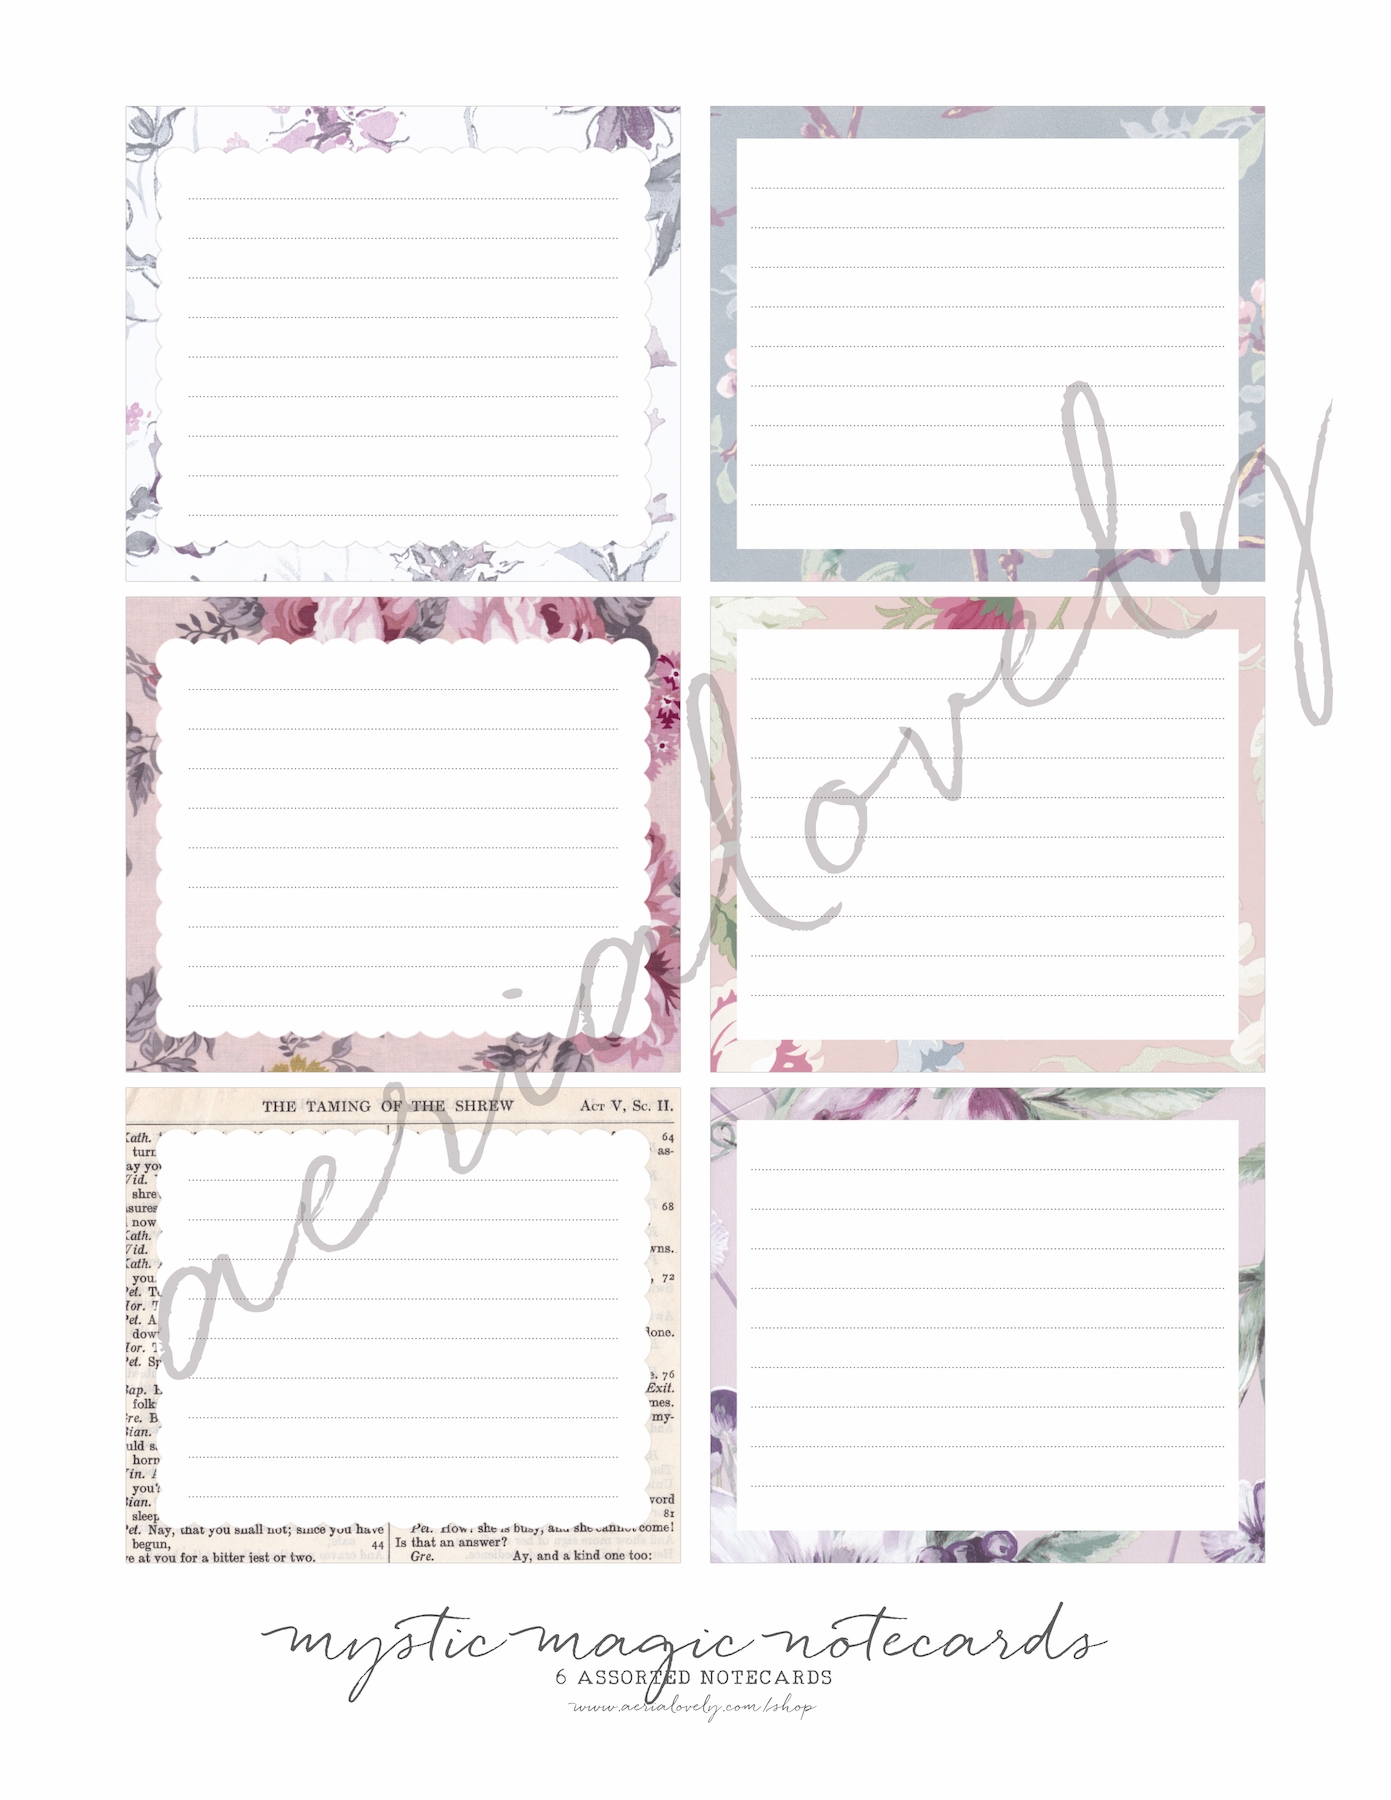 Mystic Celestial Journal Kit, Blank & Lined Page, Collage Sheets, Digital  Kit, Ephemera, Envelope, Printable Journal Kit, Scrapbook Kit 